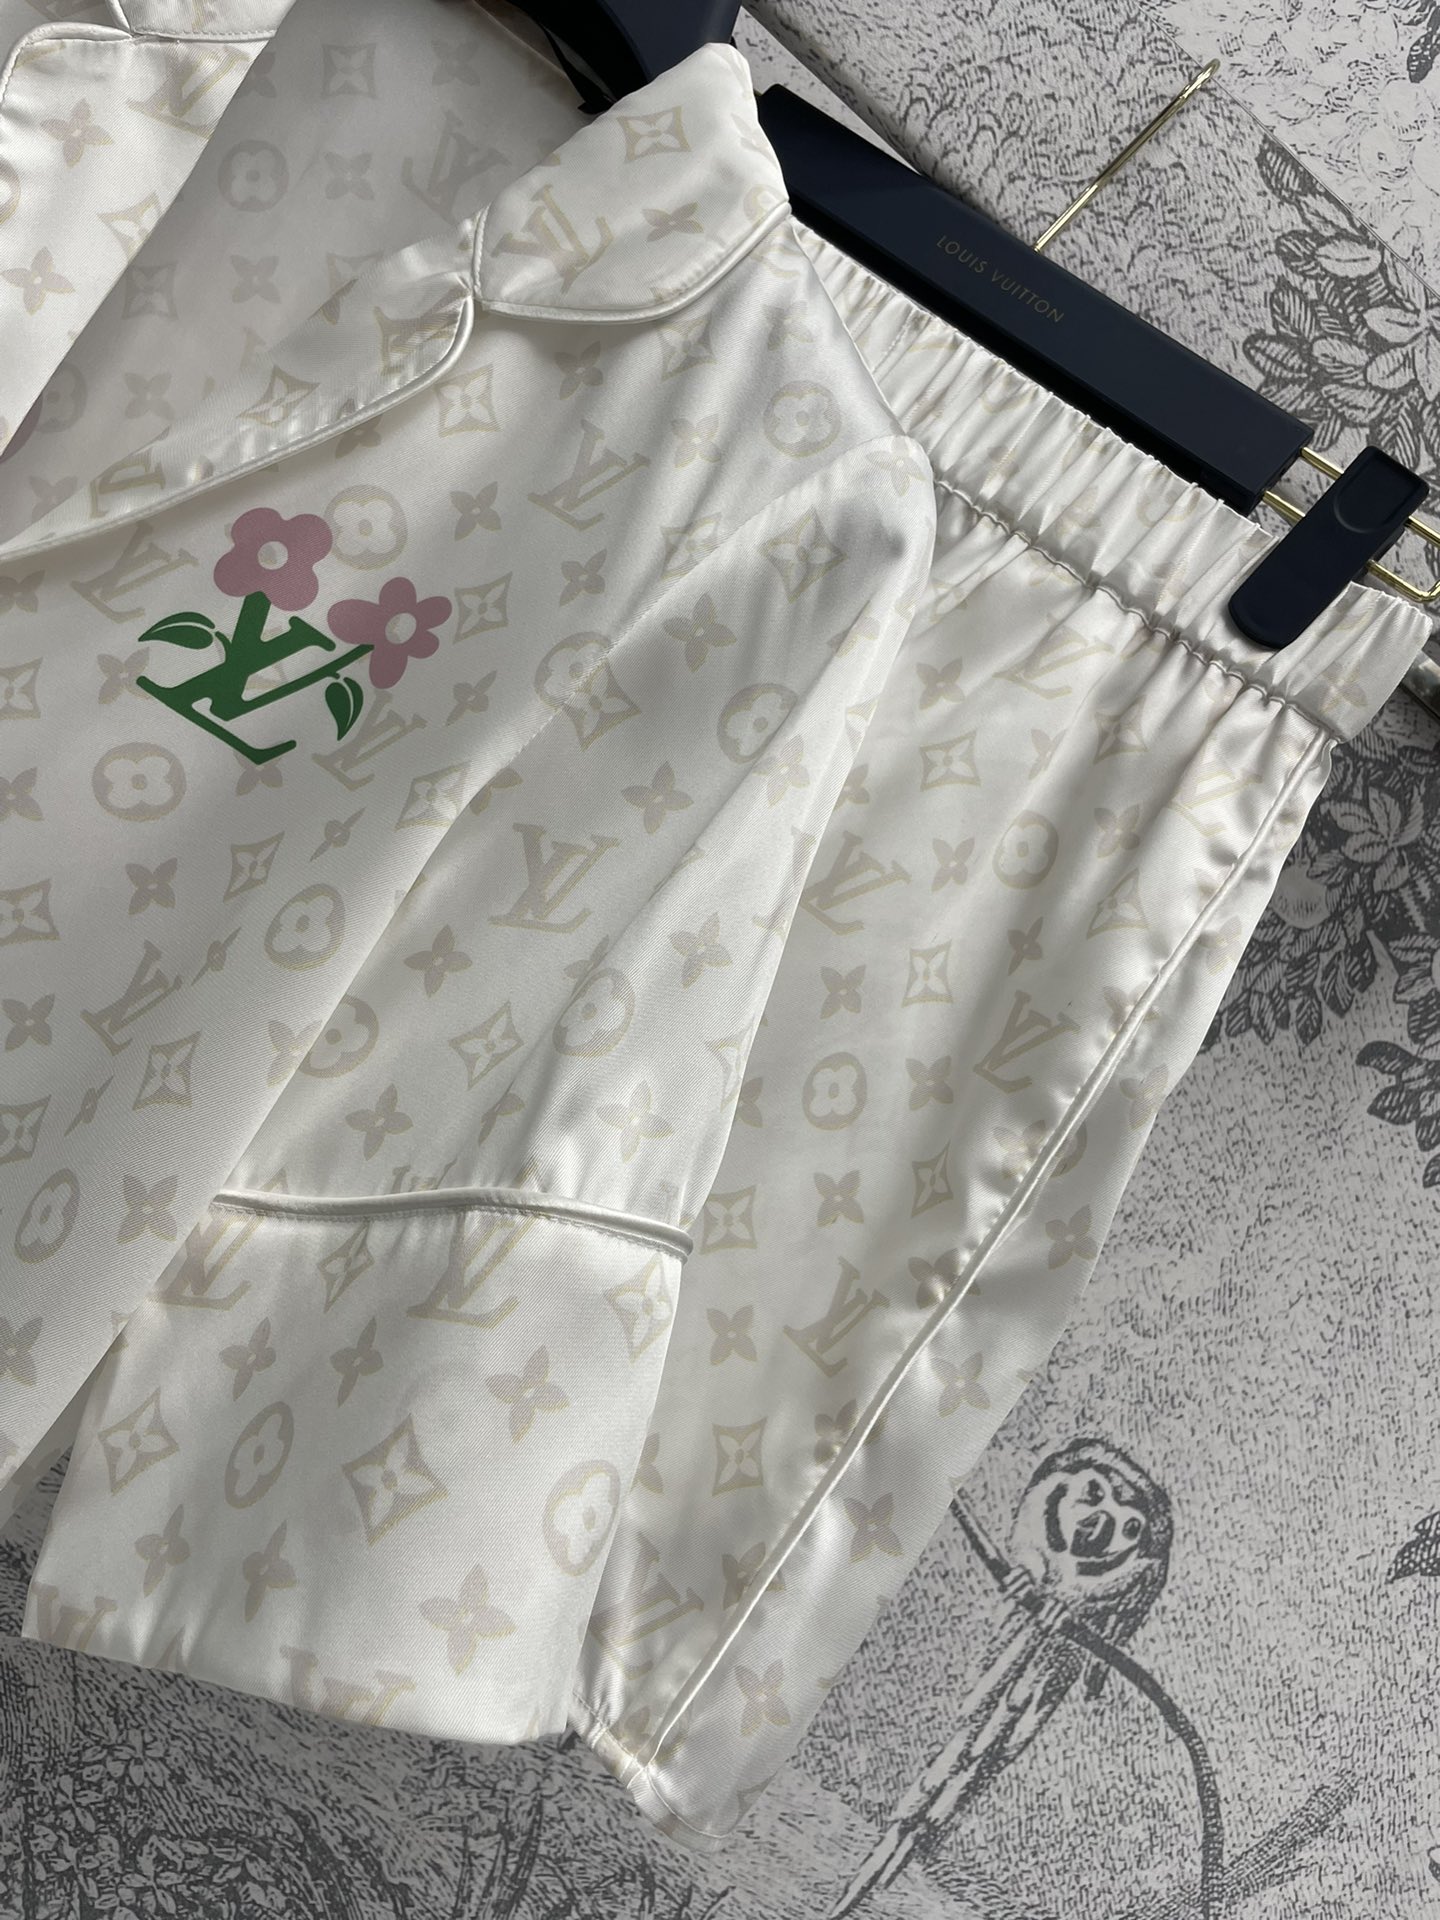 LV24春夏老花印花睡衣套装高值颜的睡衣风满印的经典品牌钱币字母图案简直绝了清新减龄又时髦超级显气质不挑